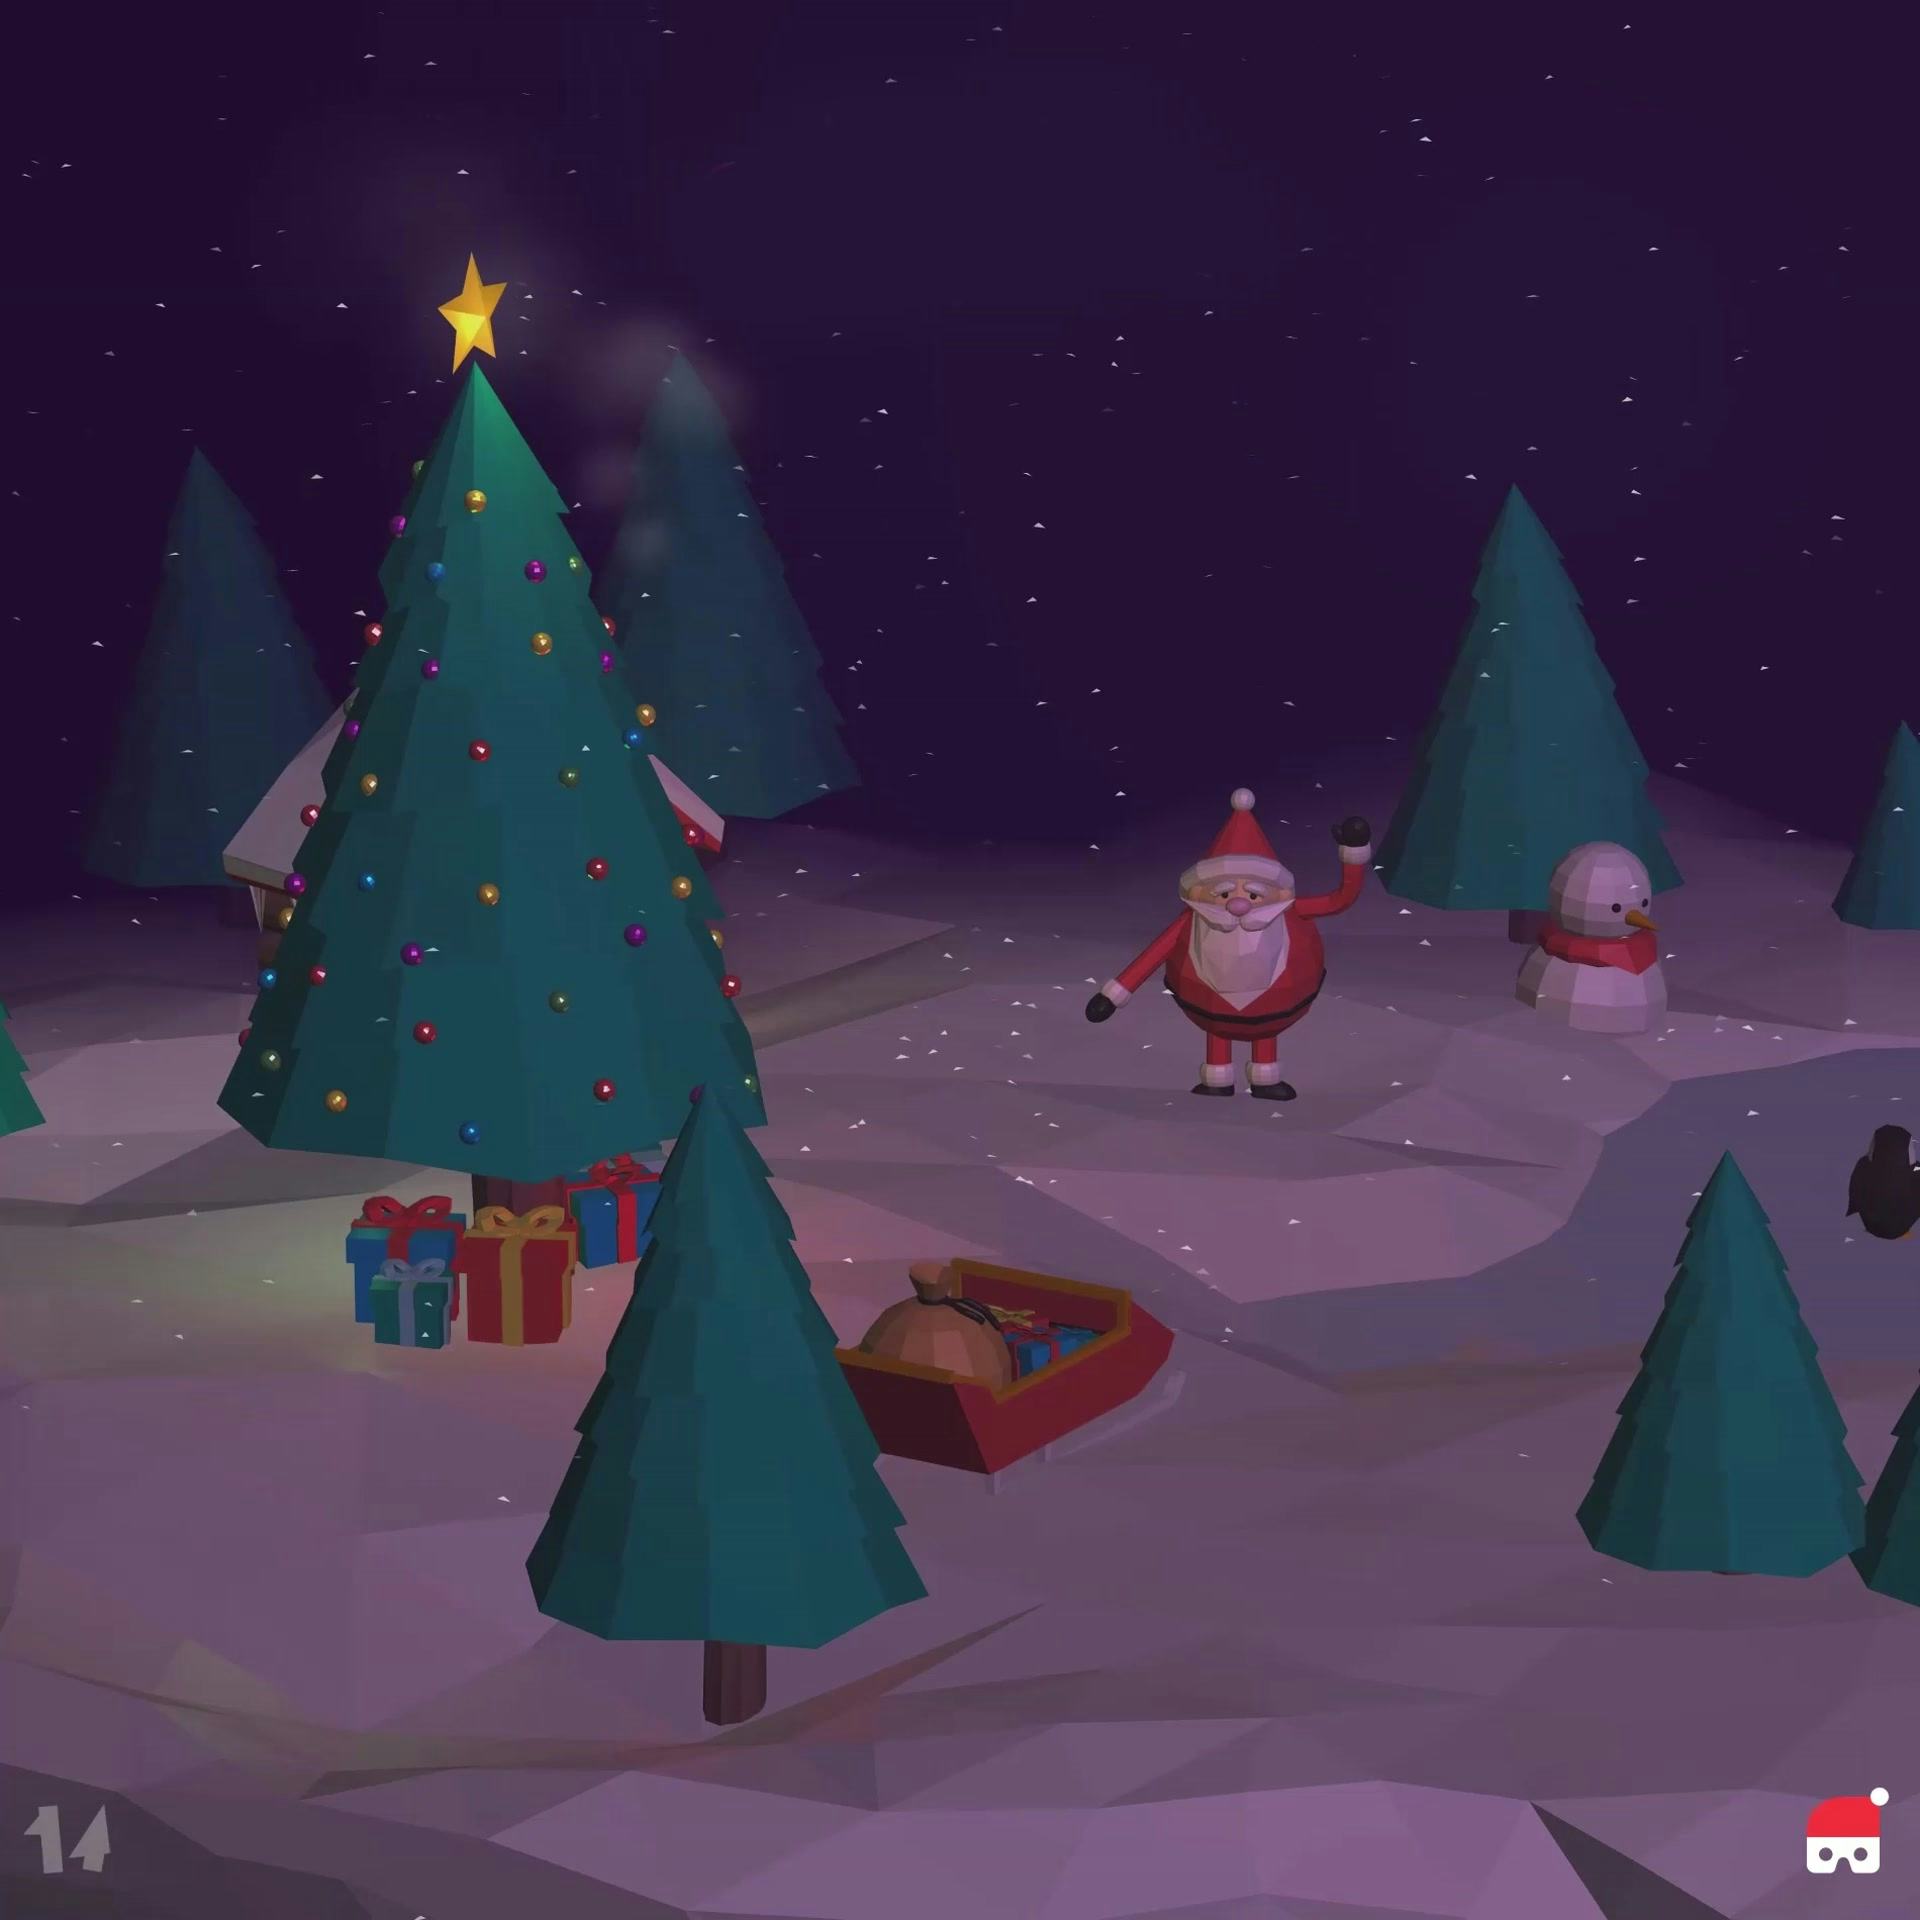 VR experience of Santa Claus inside a snow globe